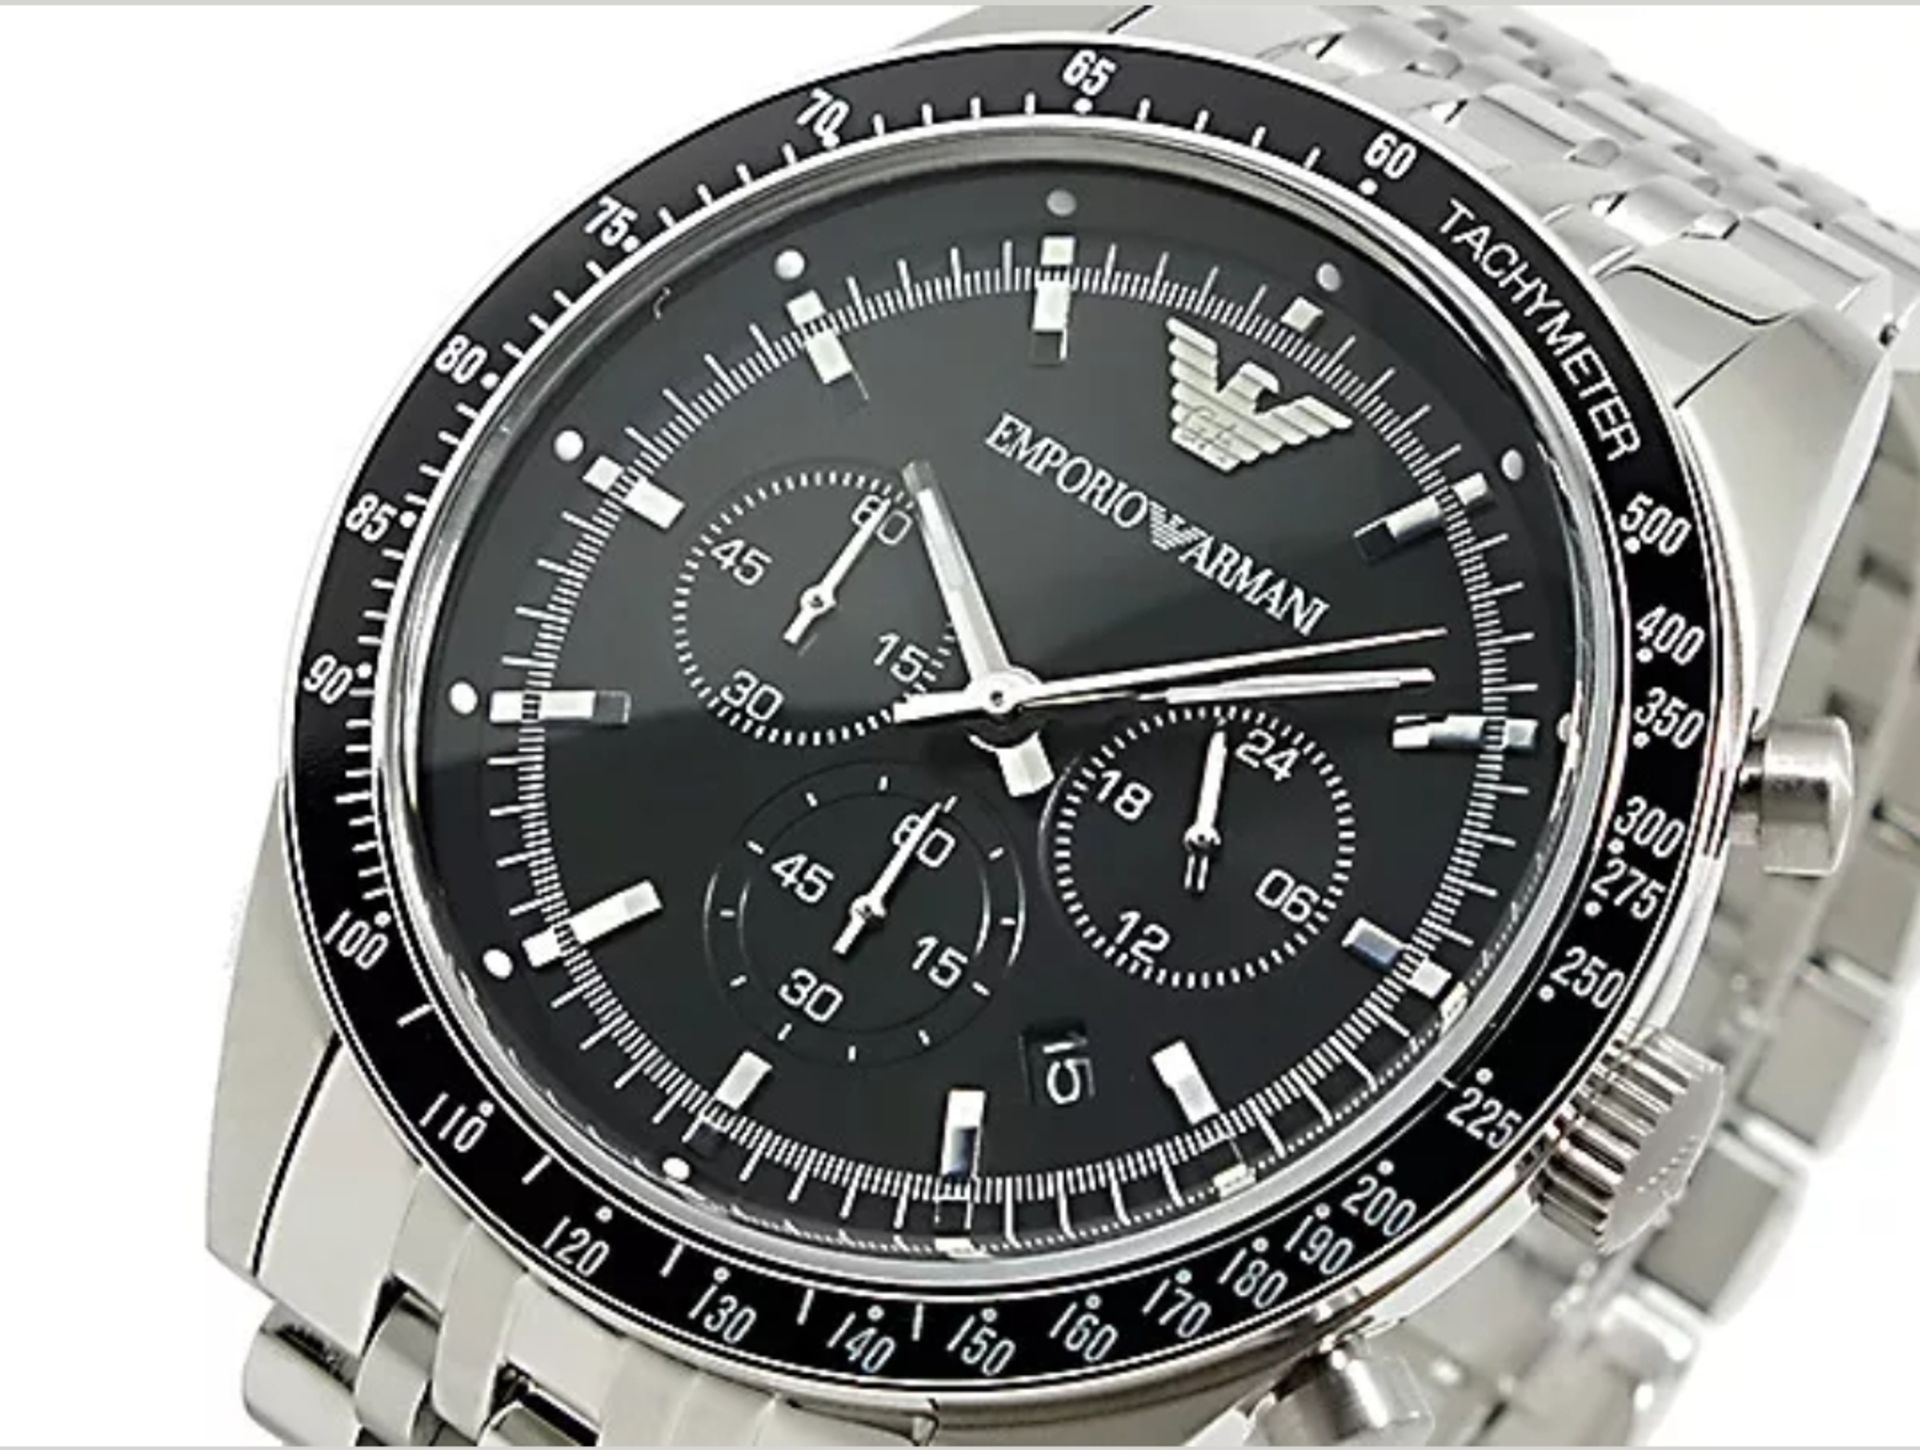 Emporio Armani AR5988 Men's Tazio Black Dial Silver Bracelet Chronograph Watch - Image 4 of 10